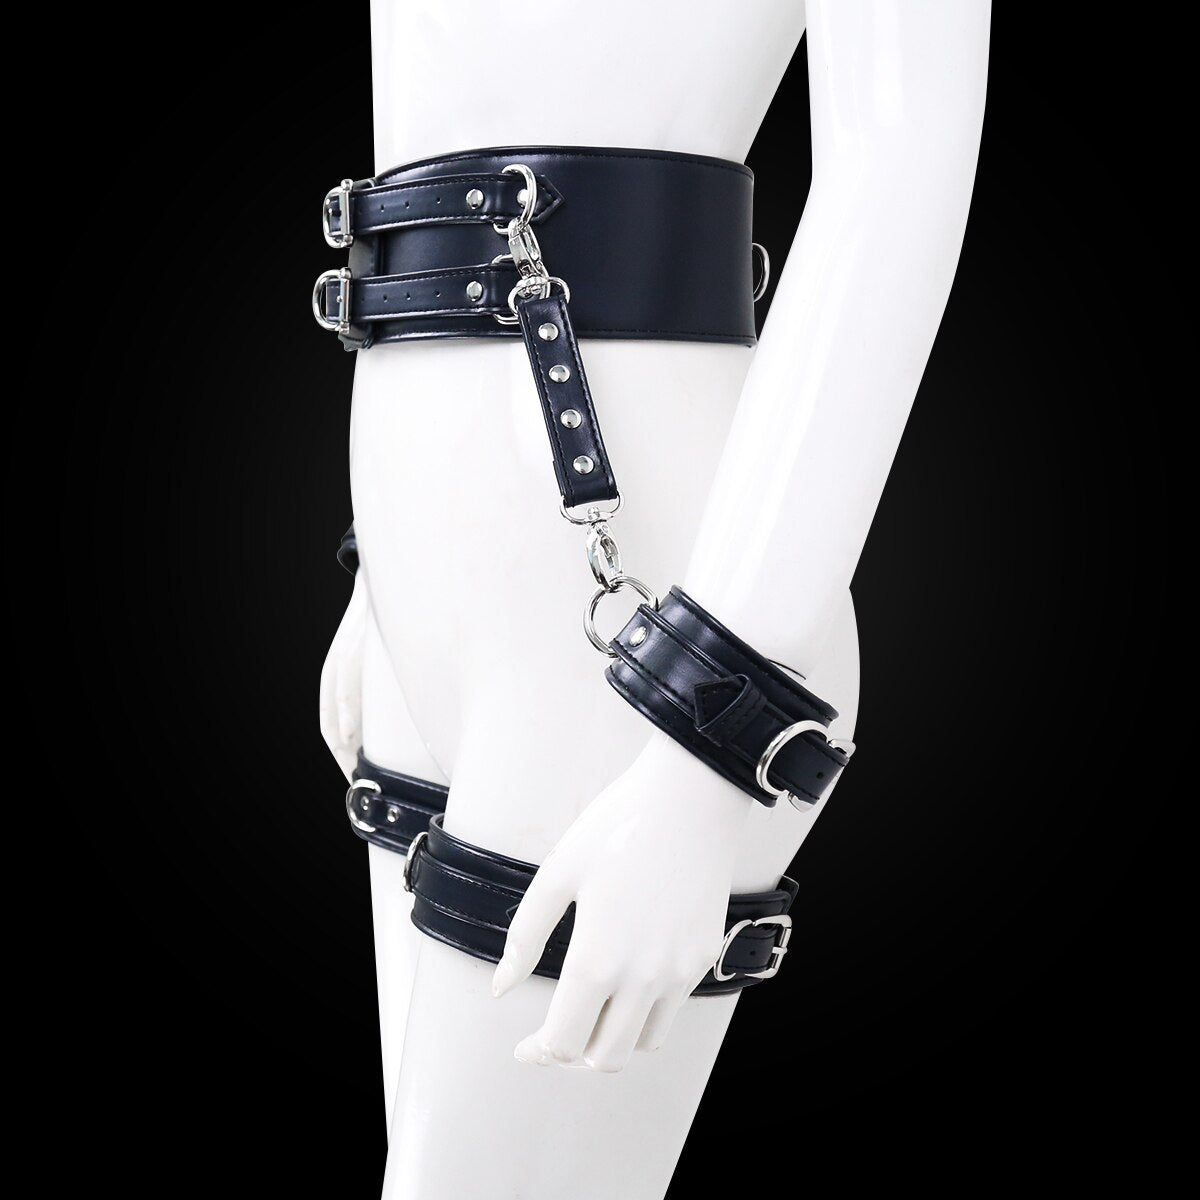 BDSM PU Leather Bondage Set / Handcuffs and Legcuffs with Center Connection and Belt - EVE's SECRETS